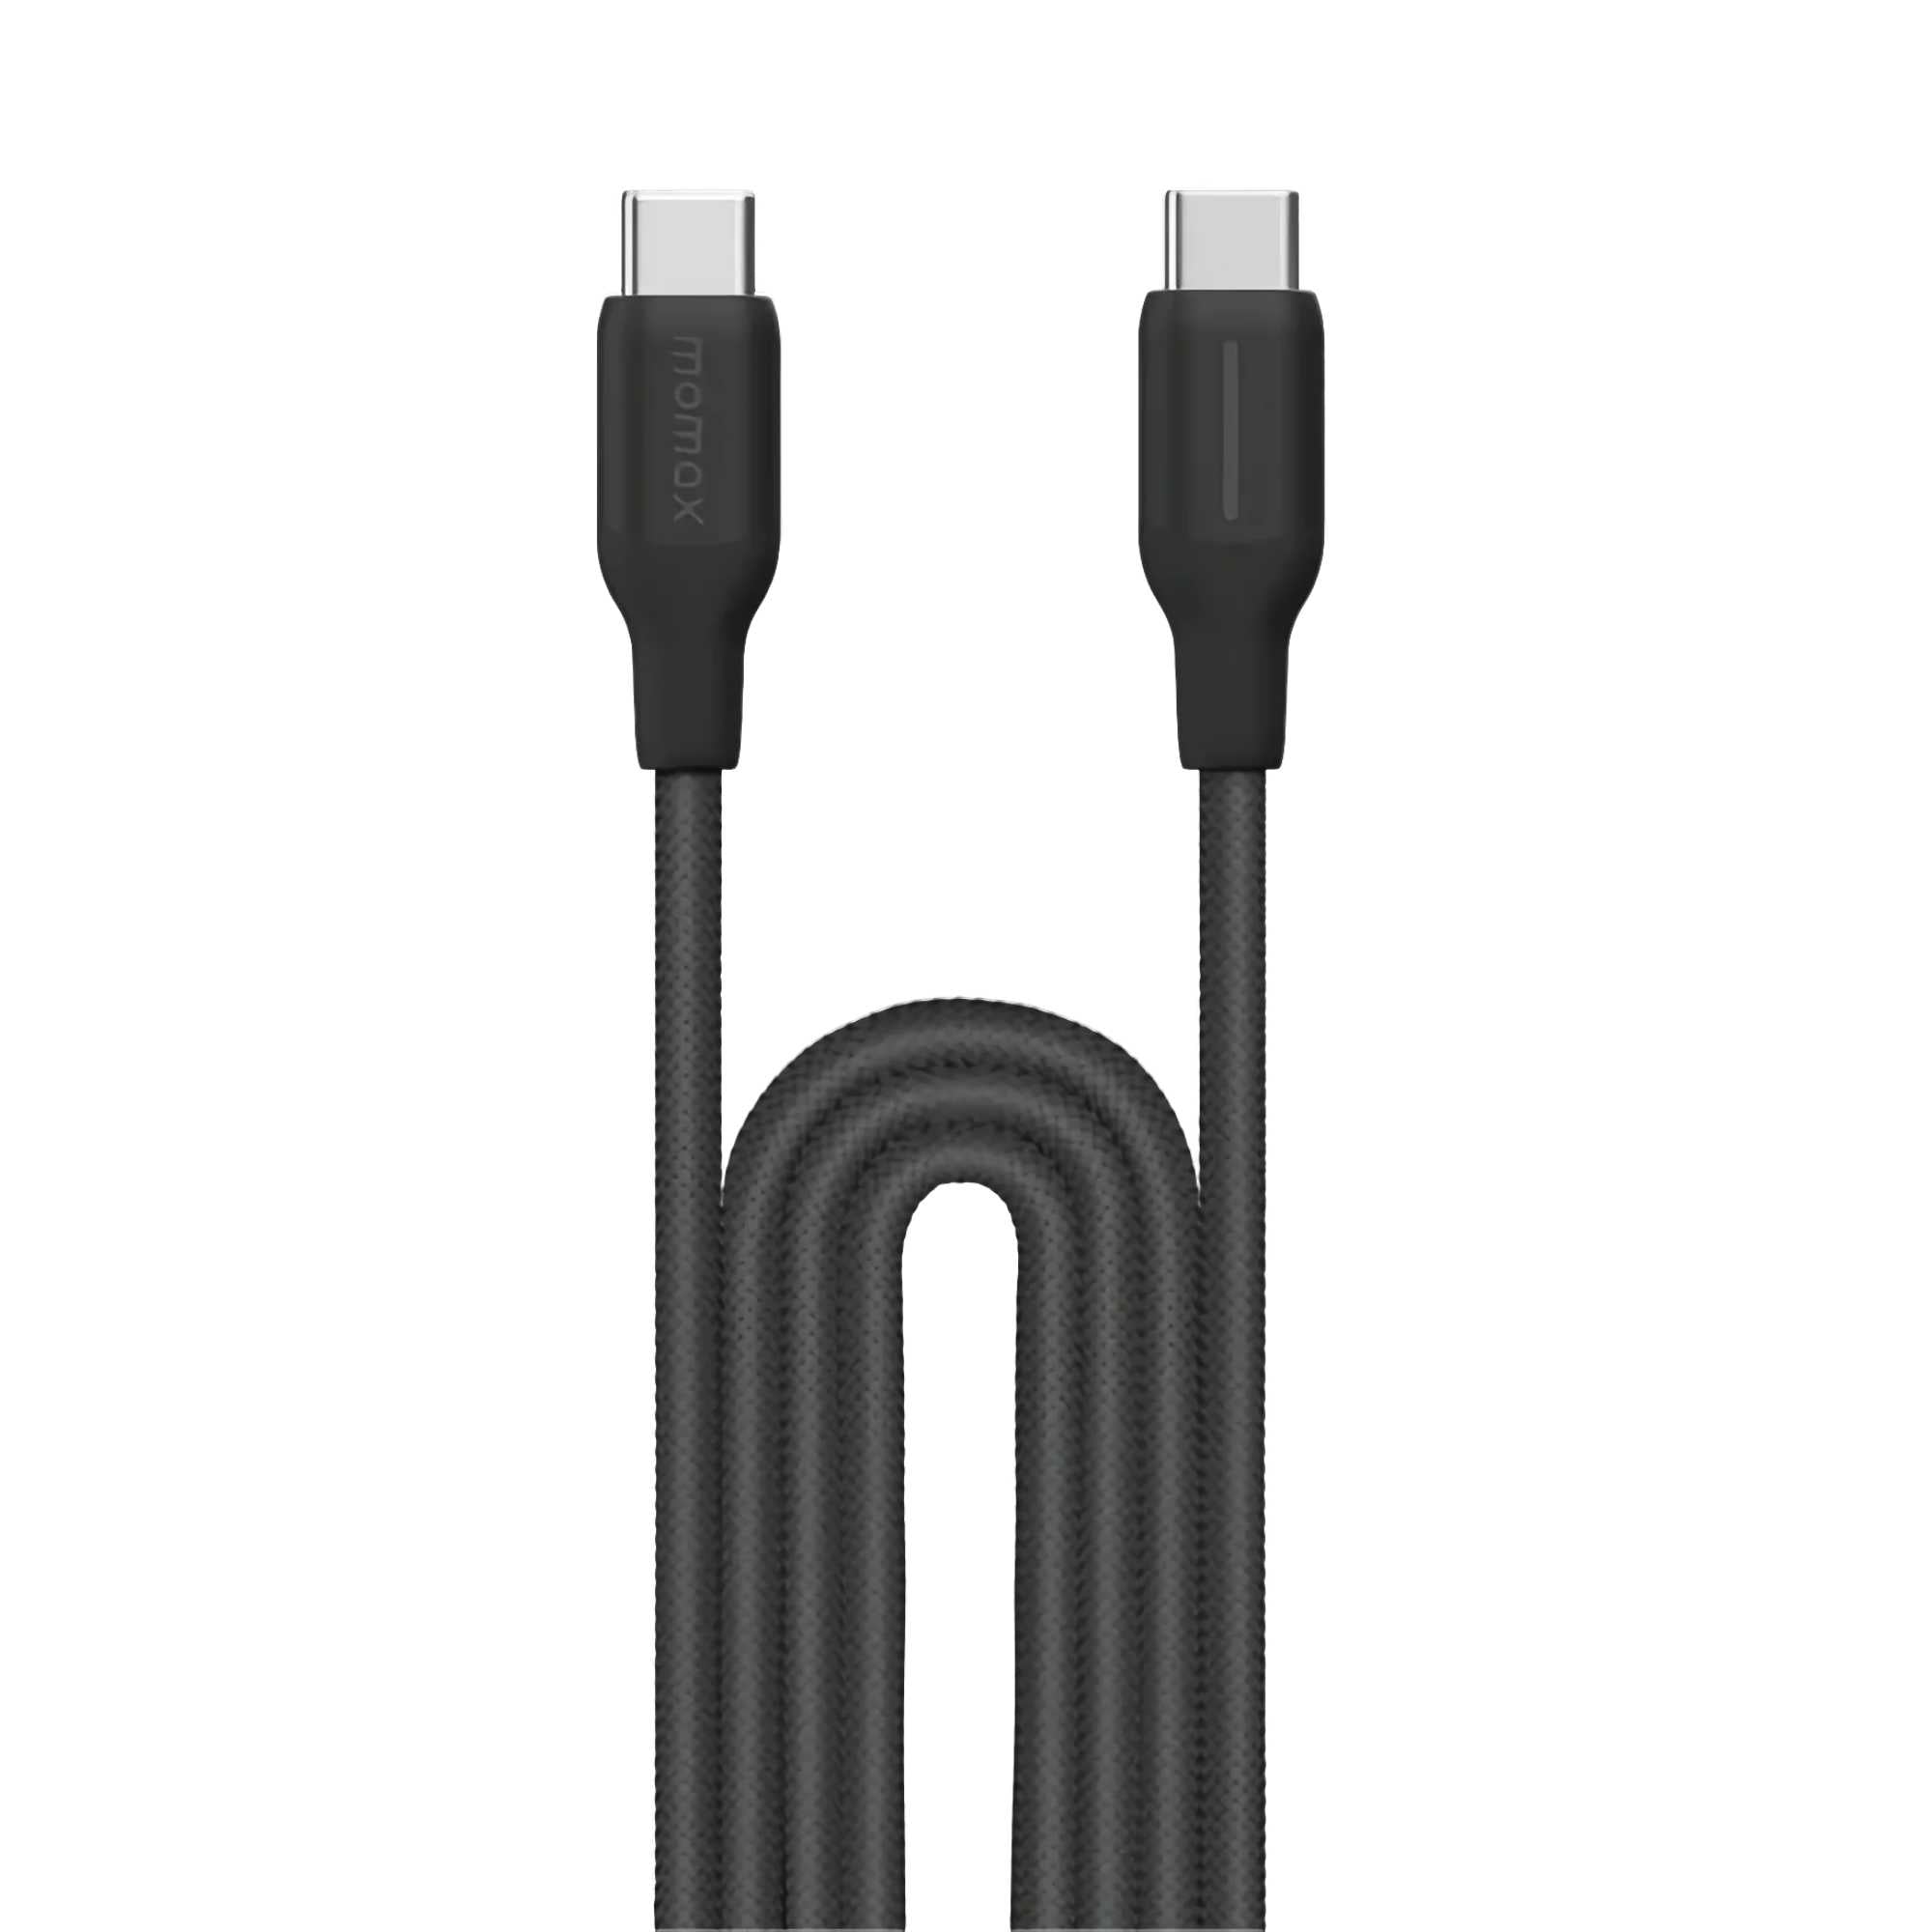 Momax 1-Link Flow CC 100W USB-C Braided Cable (2m), Black